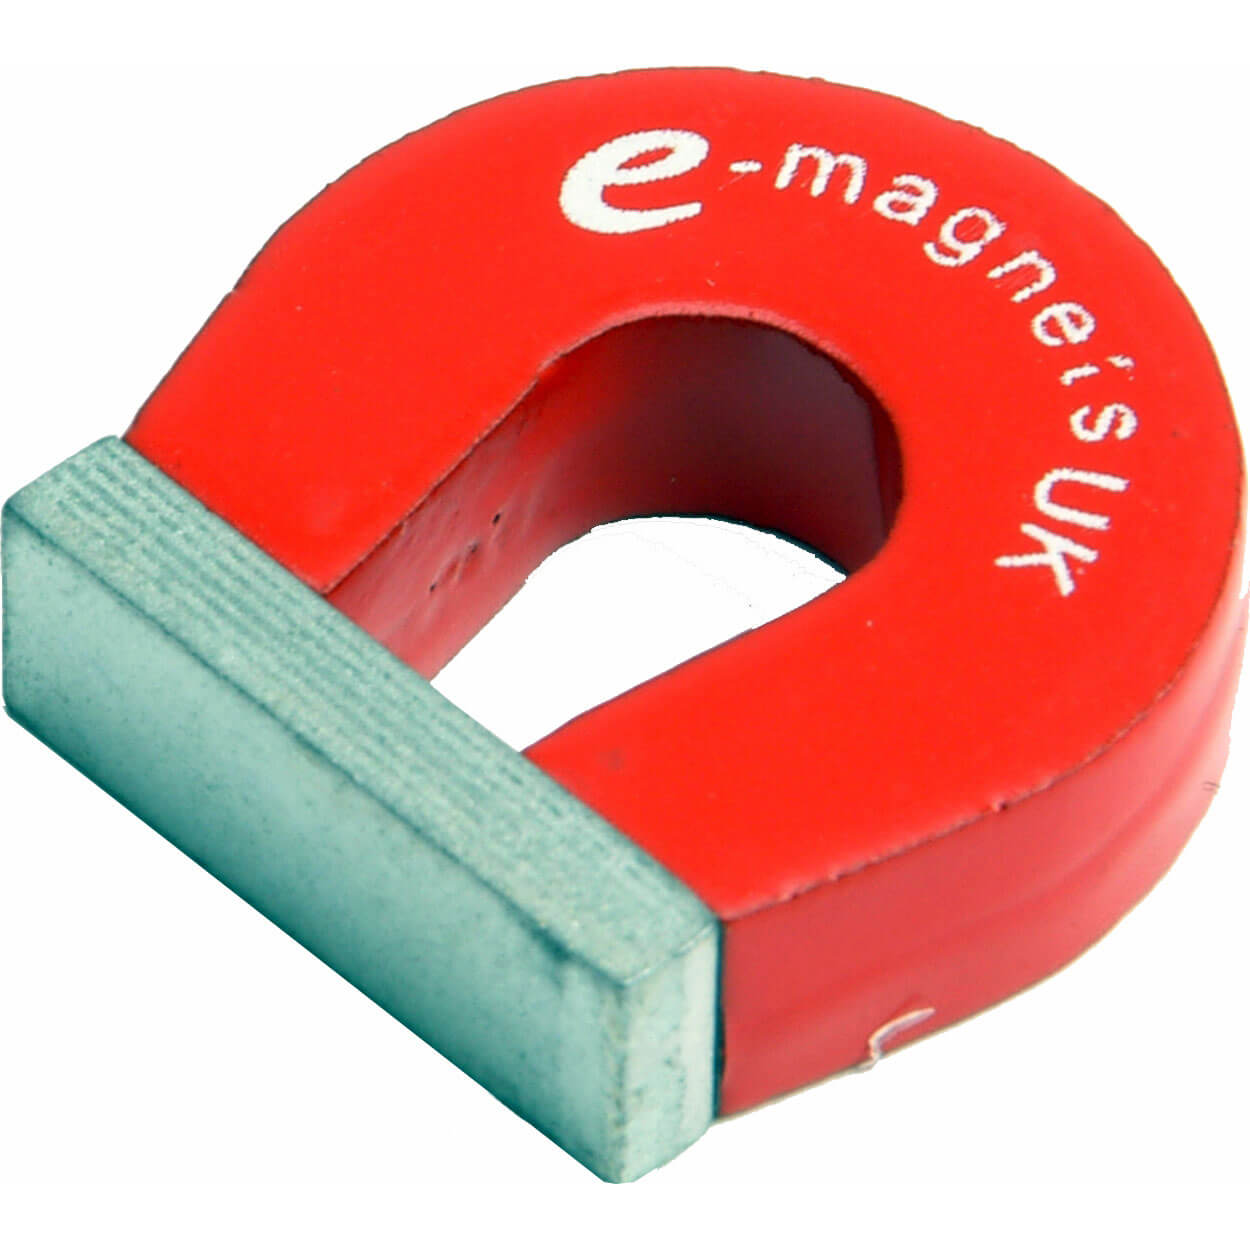 E Magnet 803 Horseshoe Magnet 27mm